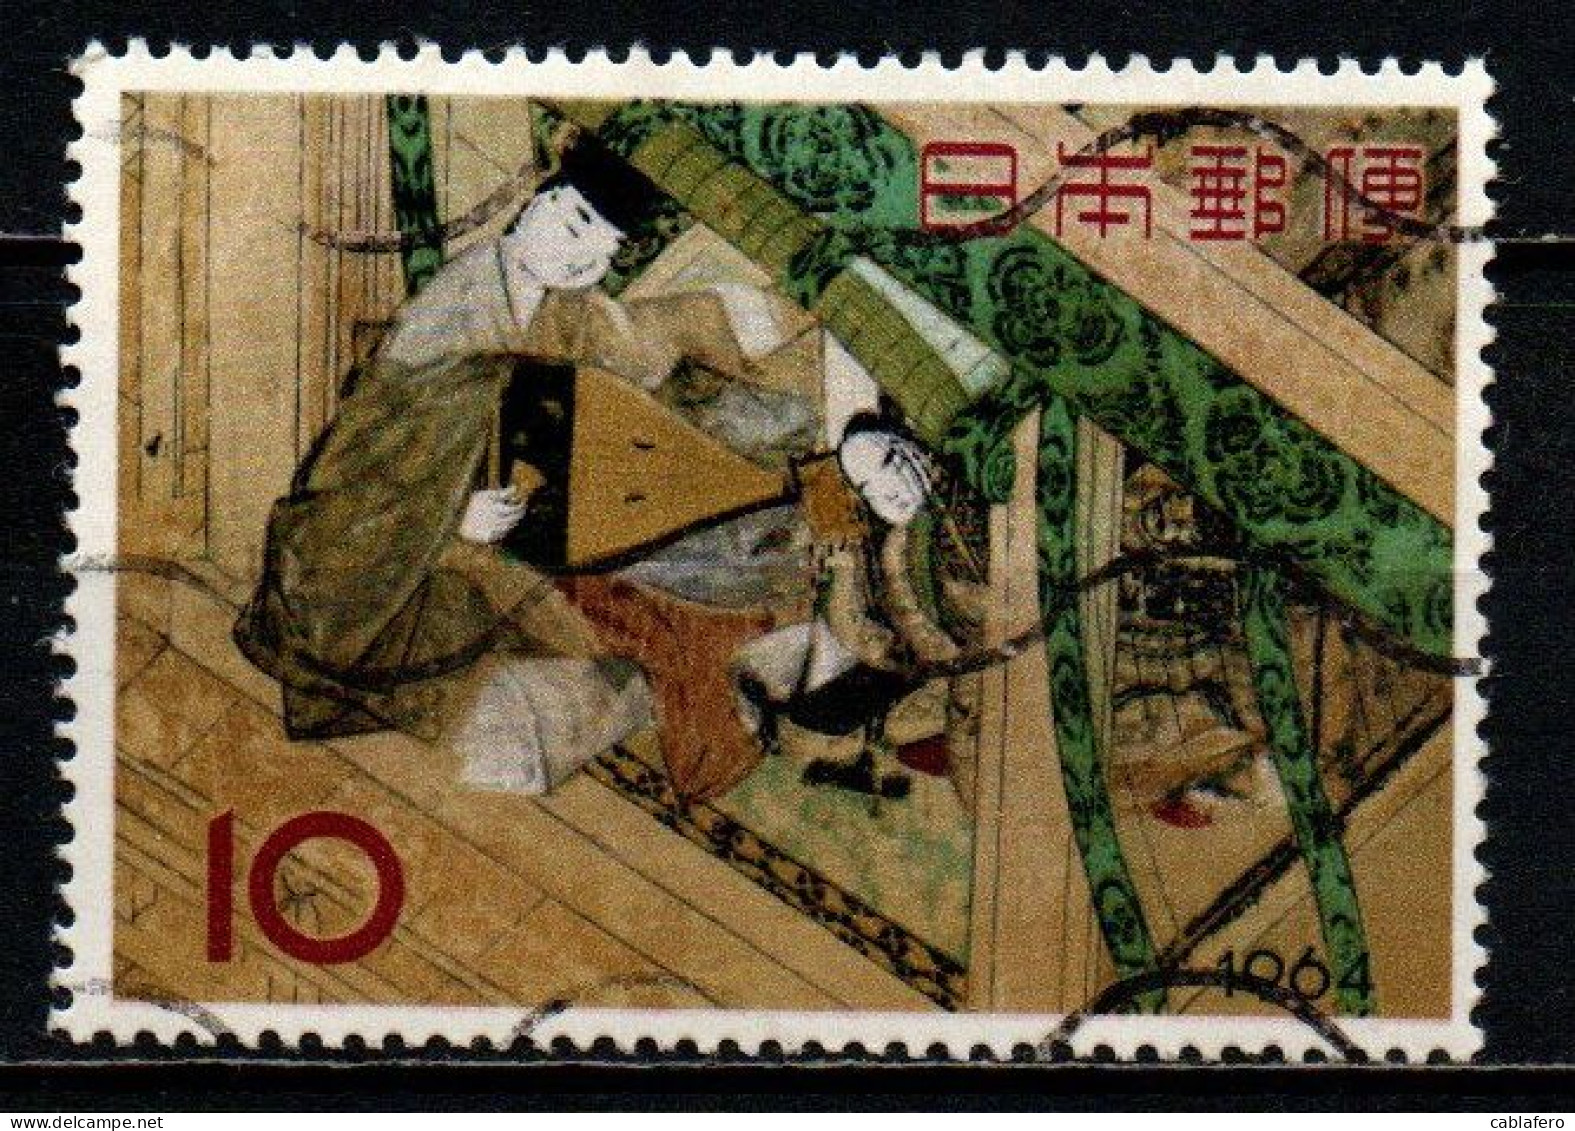 GIAPPONE - 1964 - Yadorigi Scene From Genji Monogatari Scroll - USATO - Used Stamps